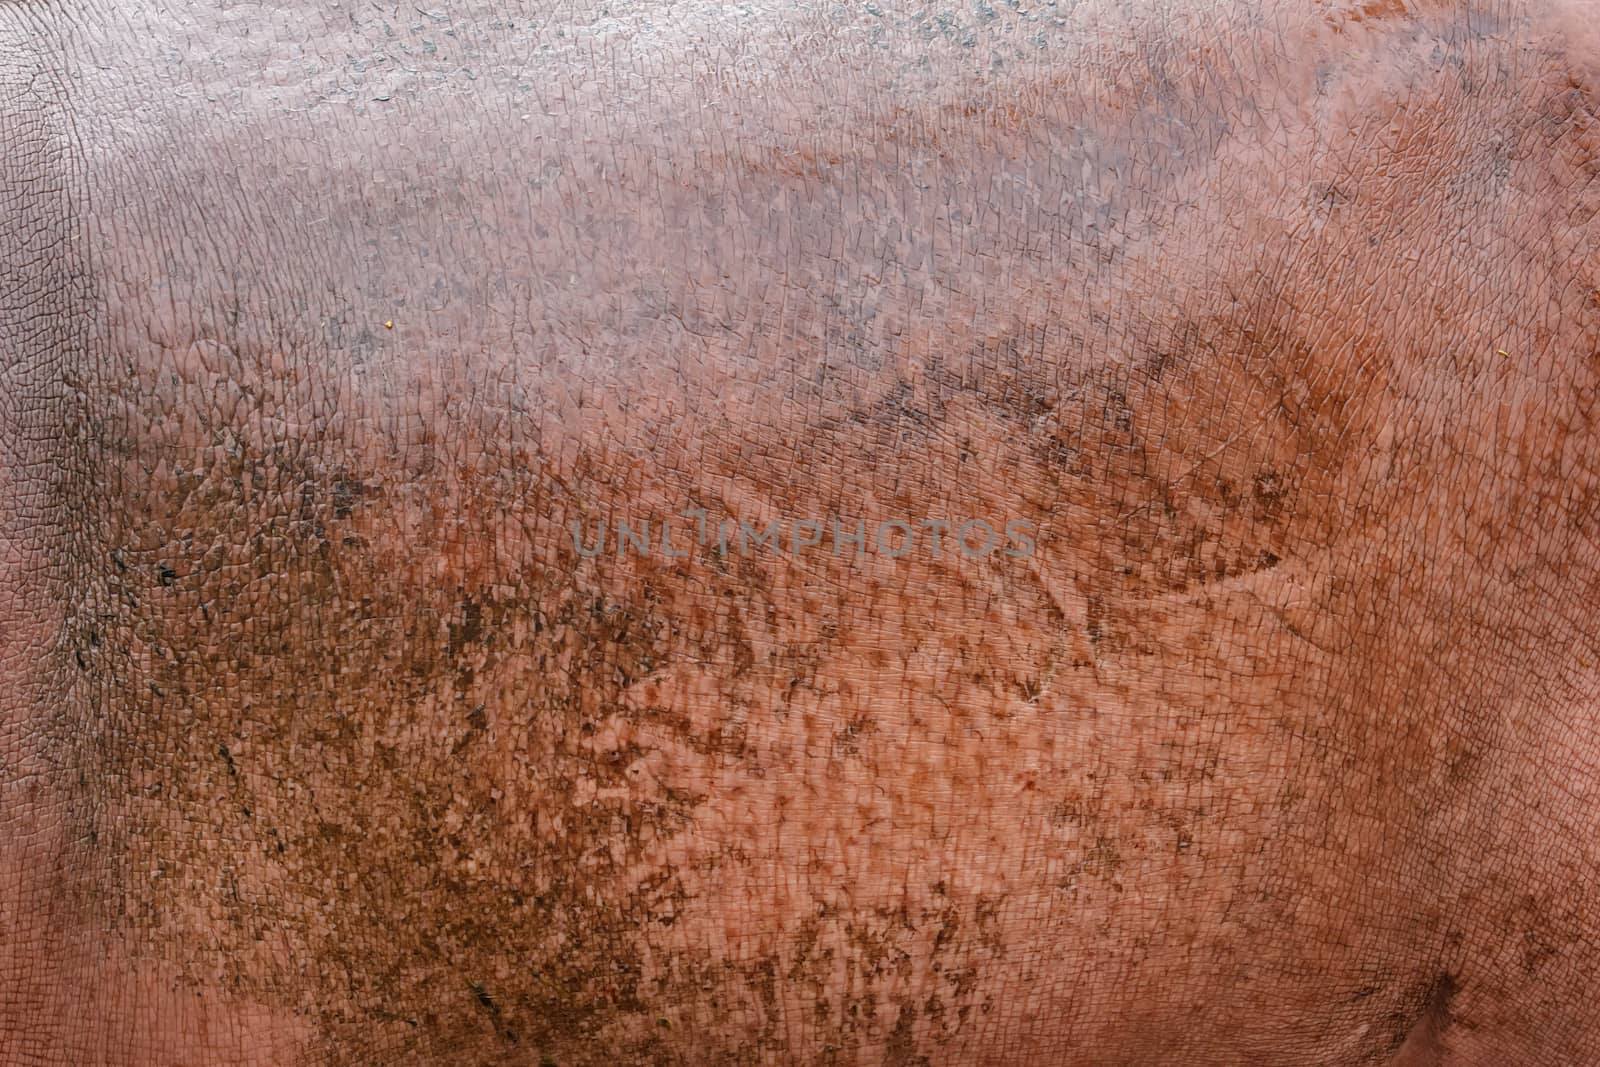 hippopotamus skin texture by vitawin